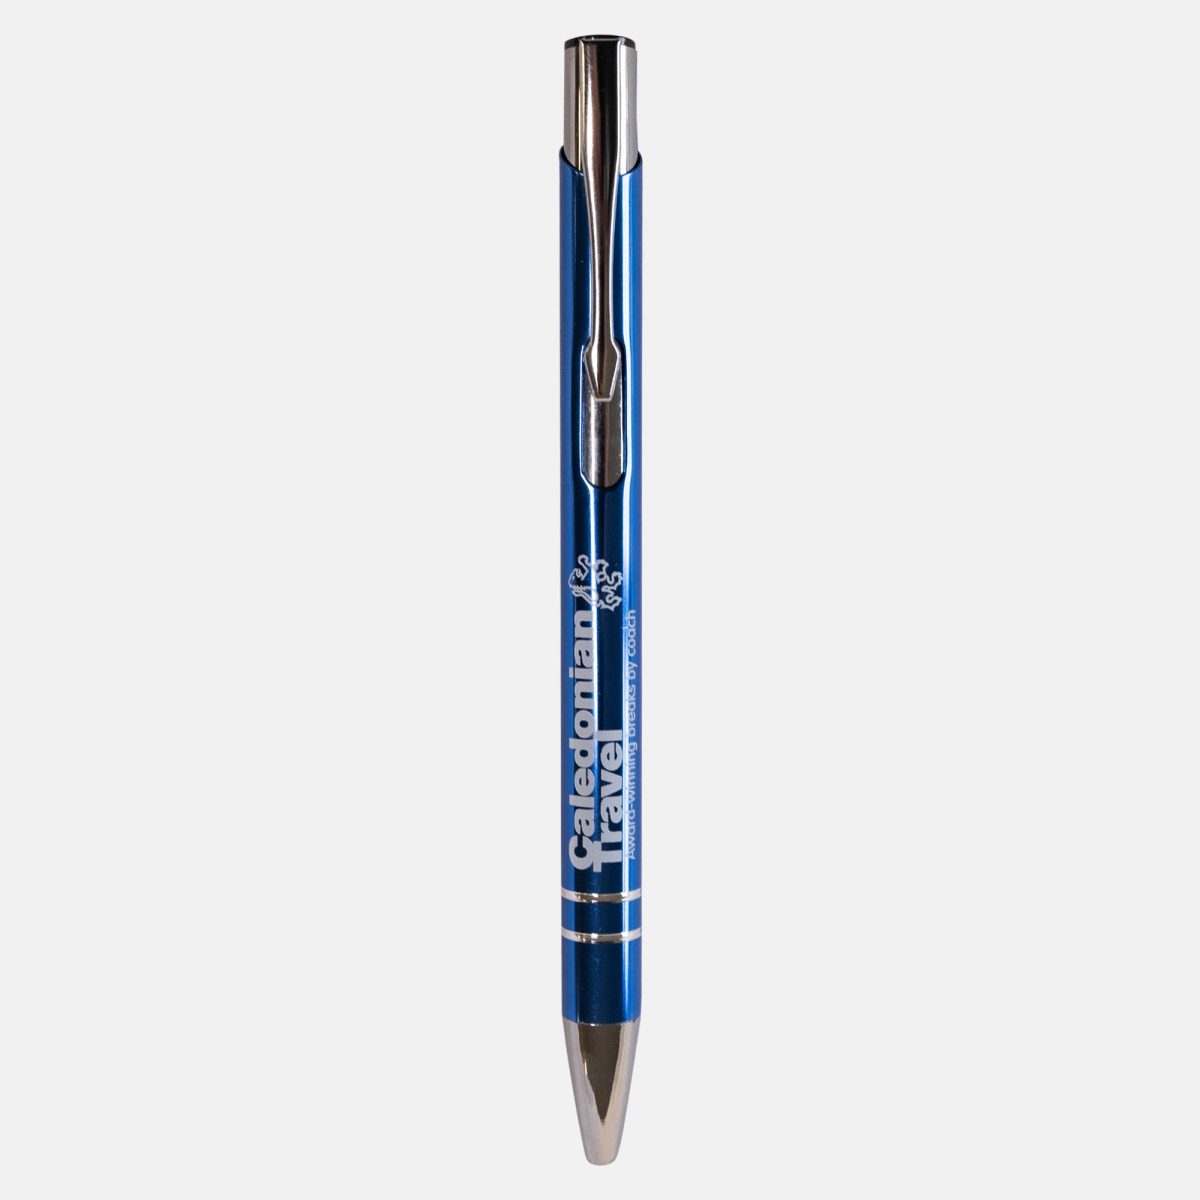 caledonian travel blue metal pen